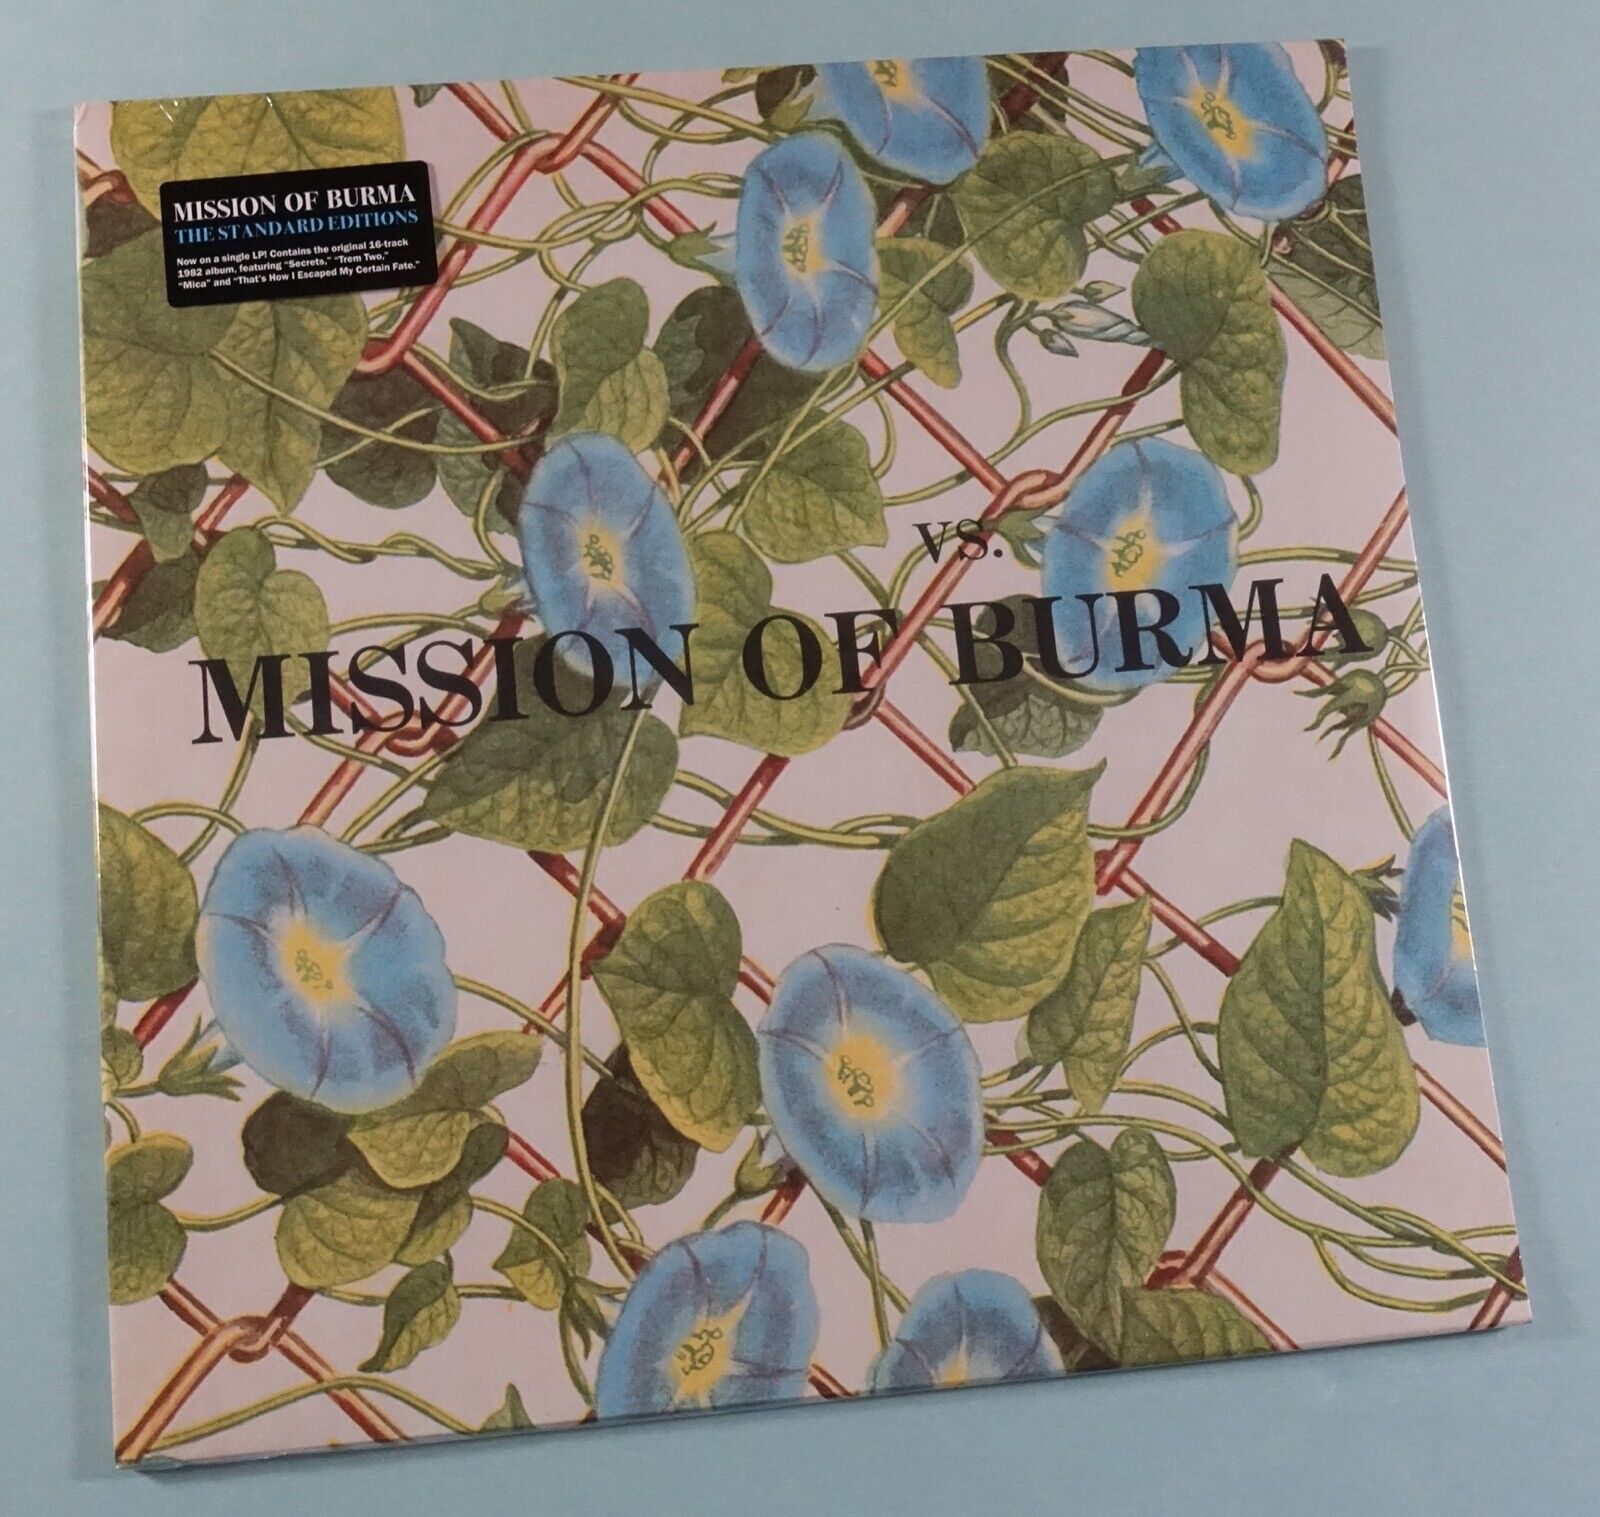 MISSION OF BURMA “Vs." NEW Vinyl LP Record SEALED Post Punk Album CLASSIC Indie